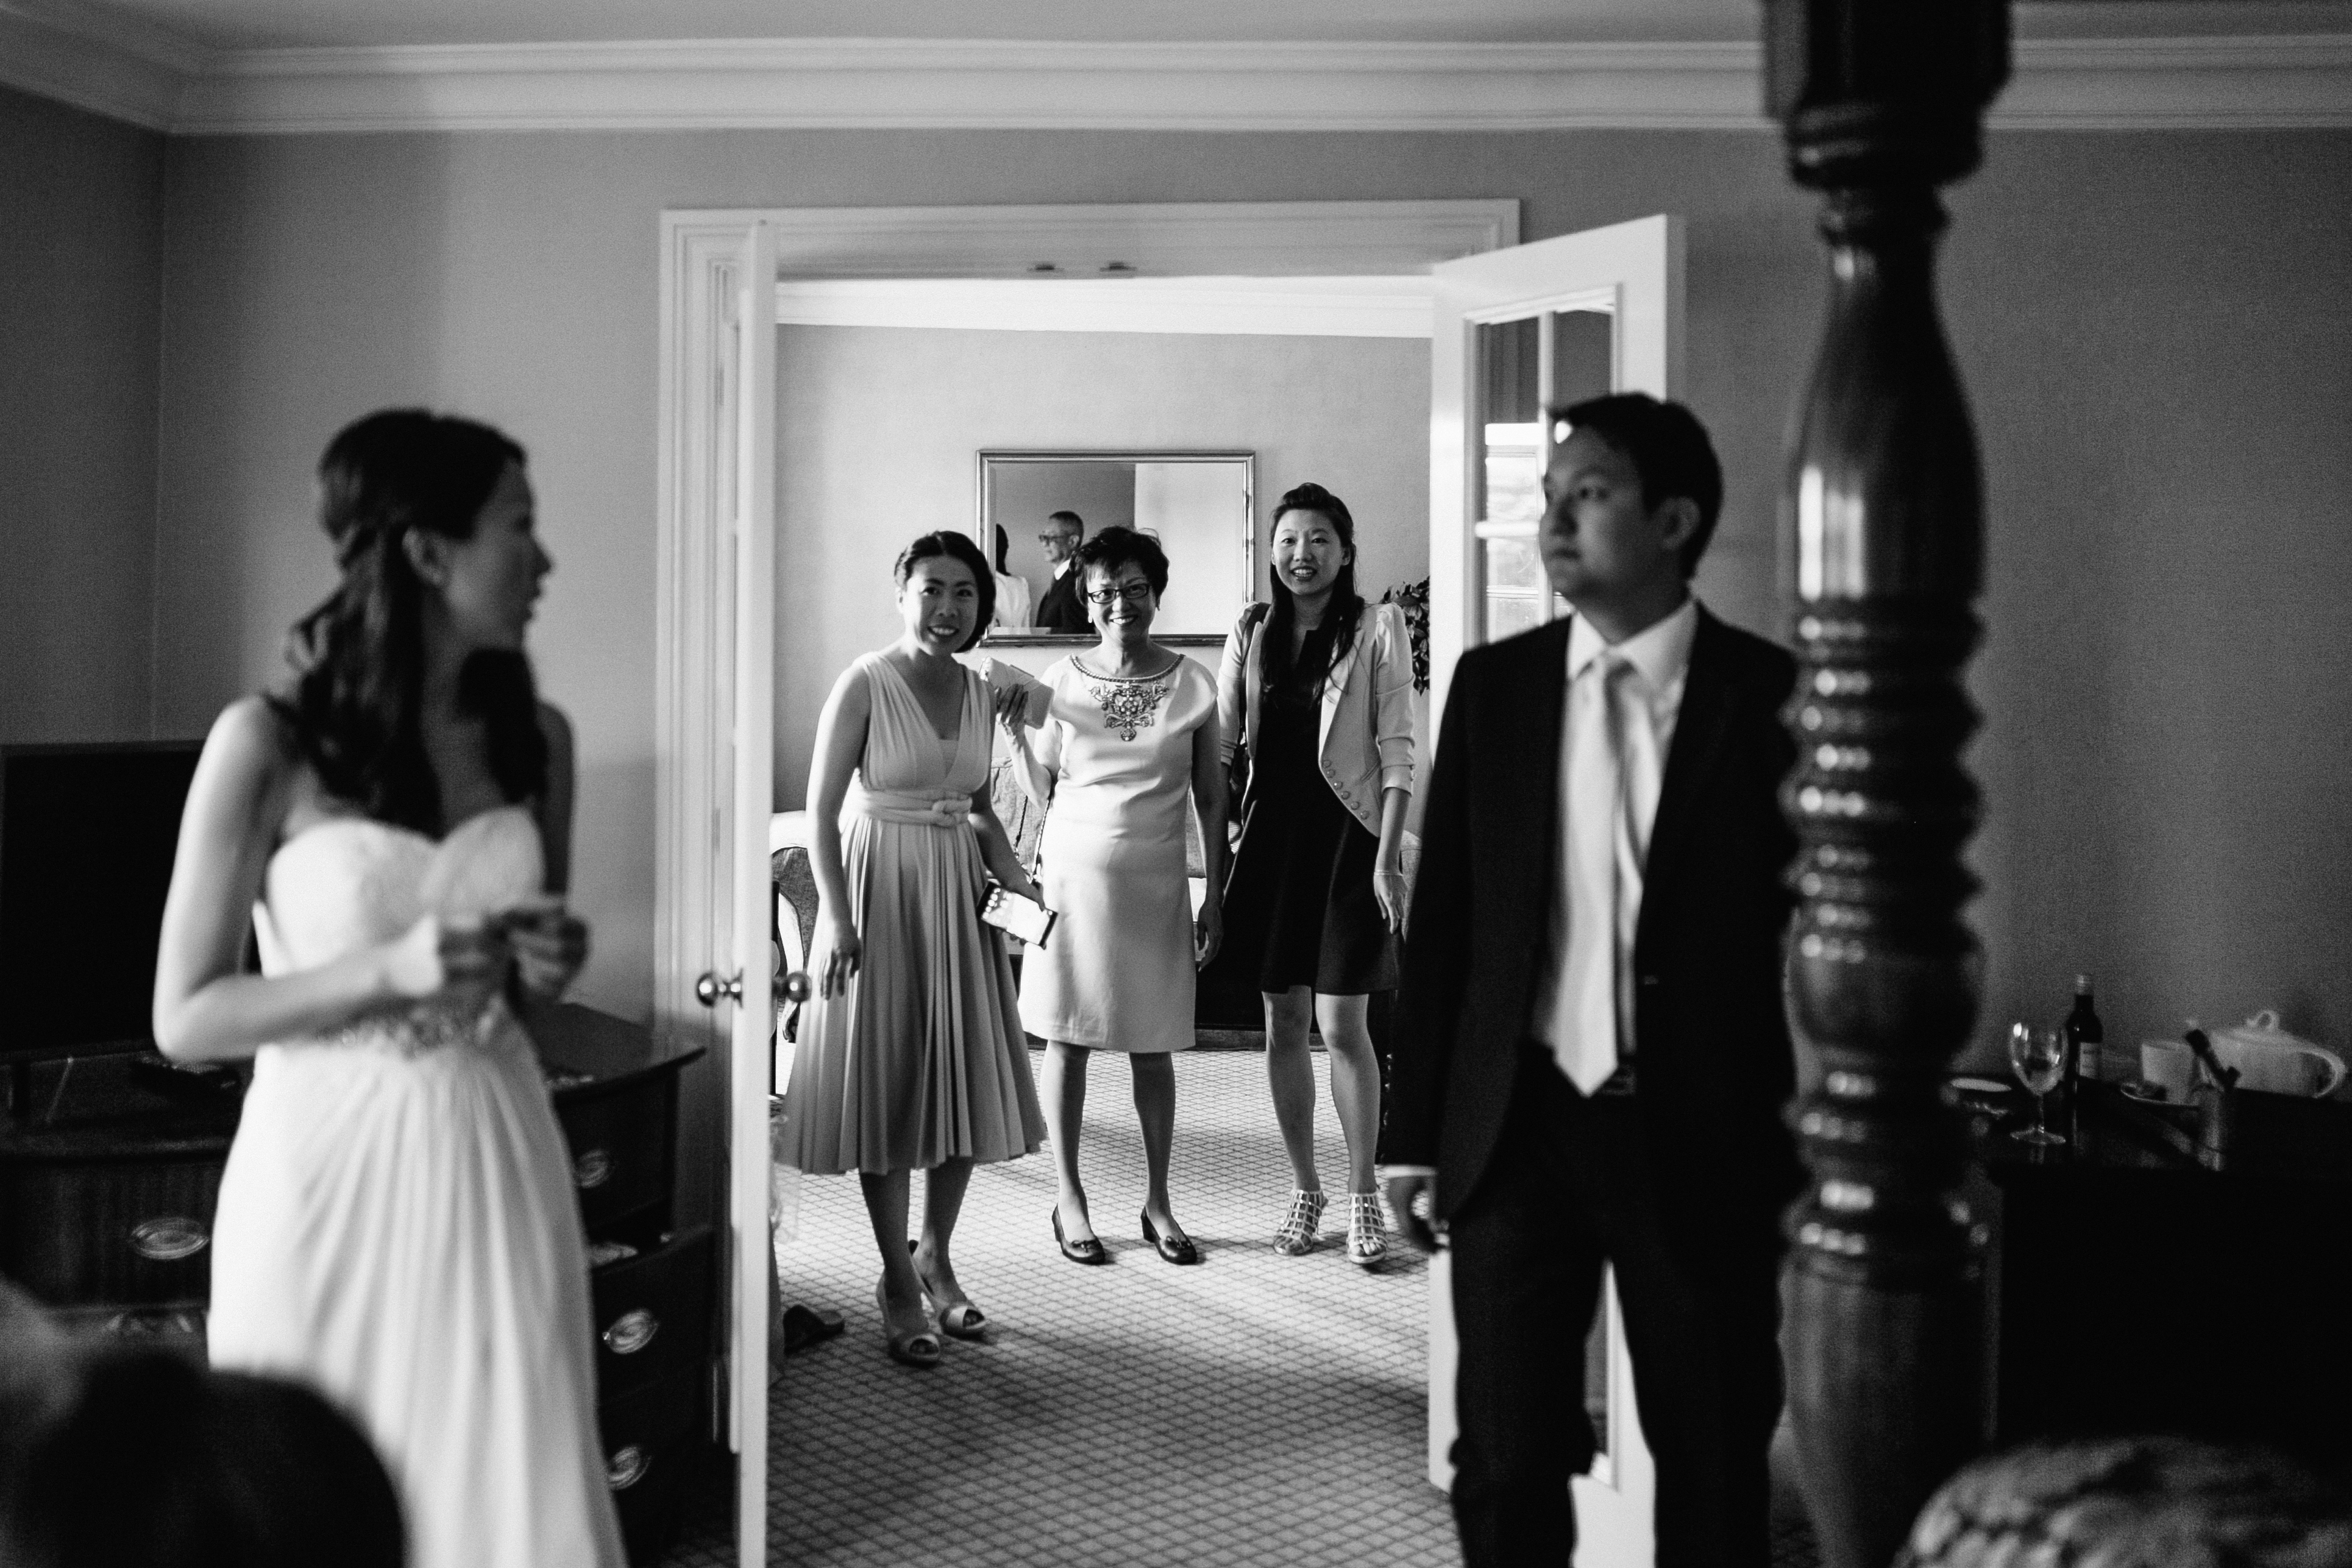 documentary wedding photography london and brighton